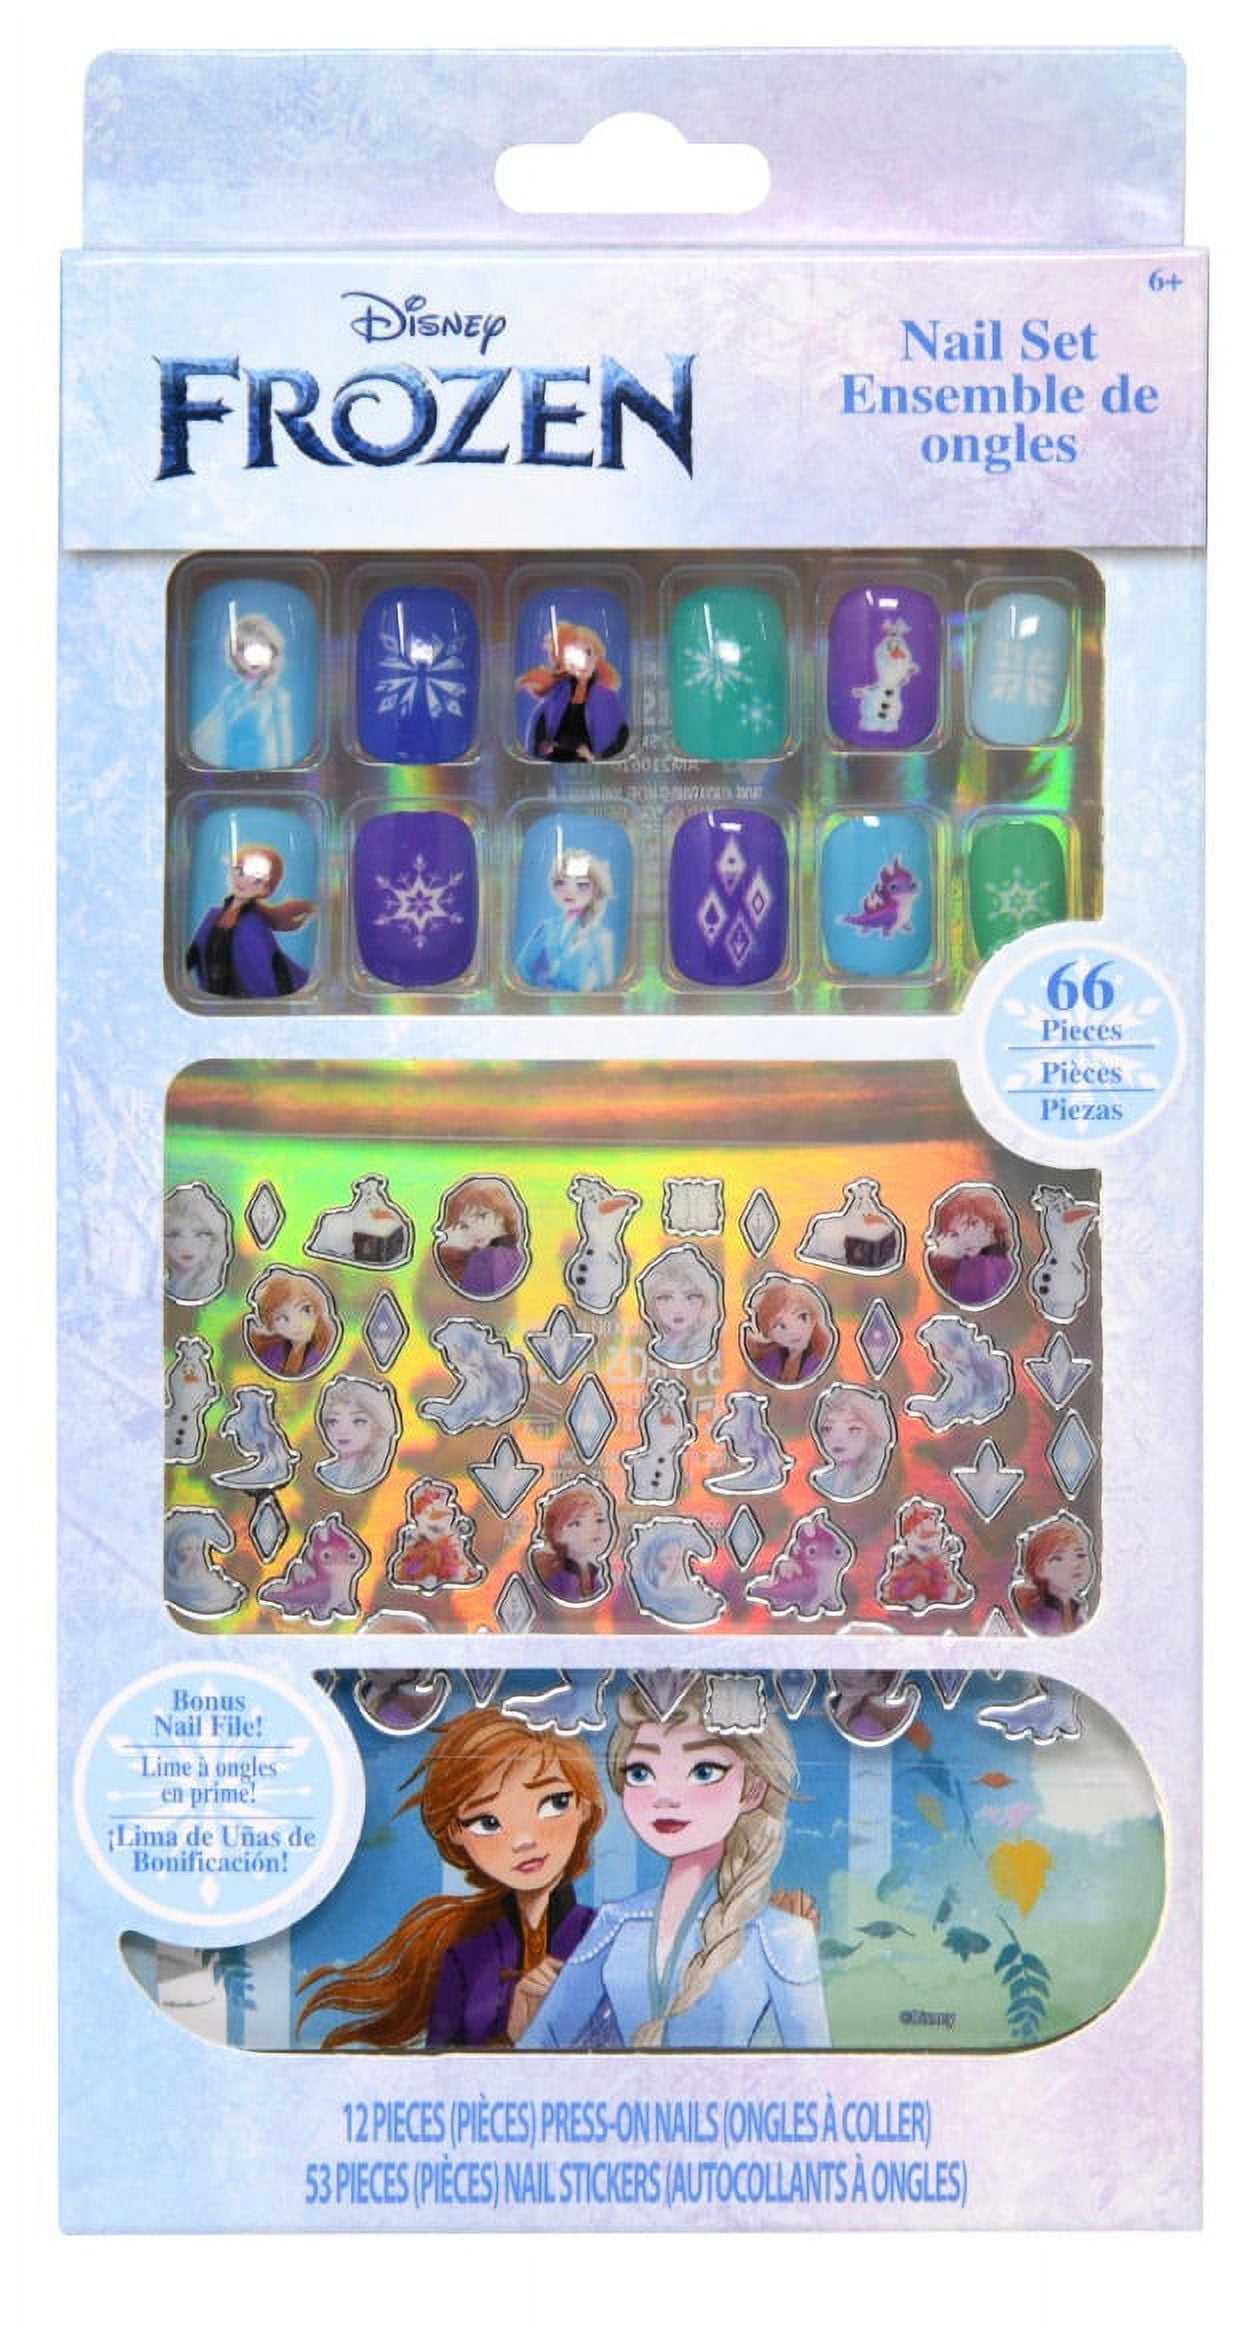 Nails frozen 2 | Frozen nail designs, Christmas nail designs, Nail art  designs